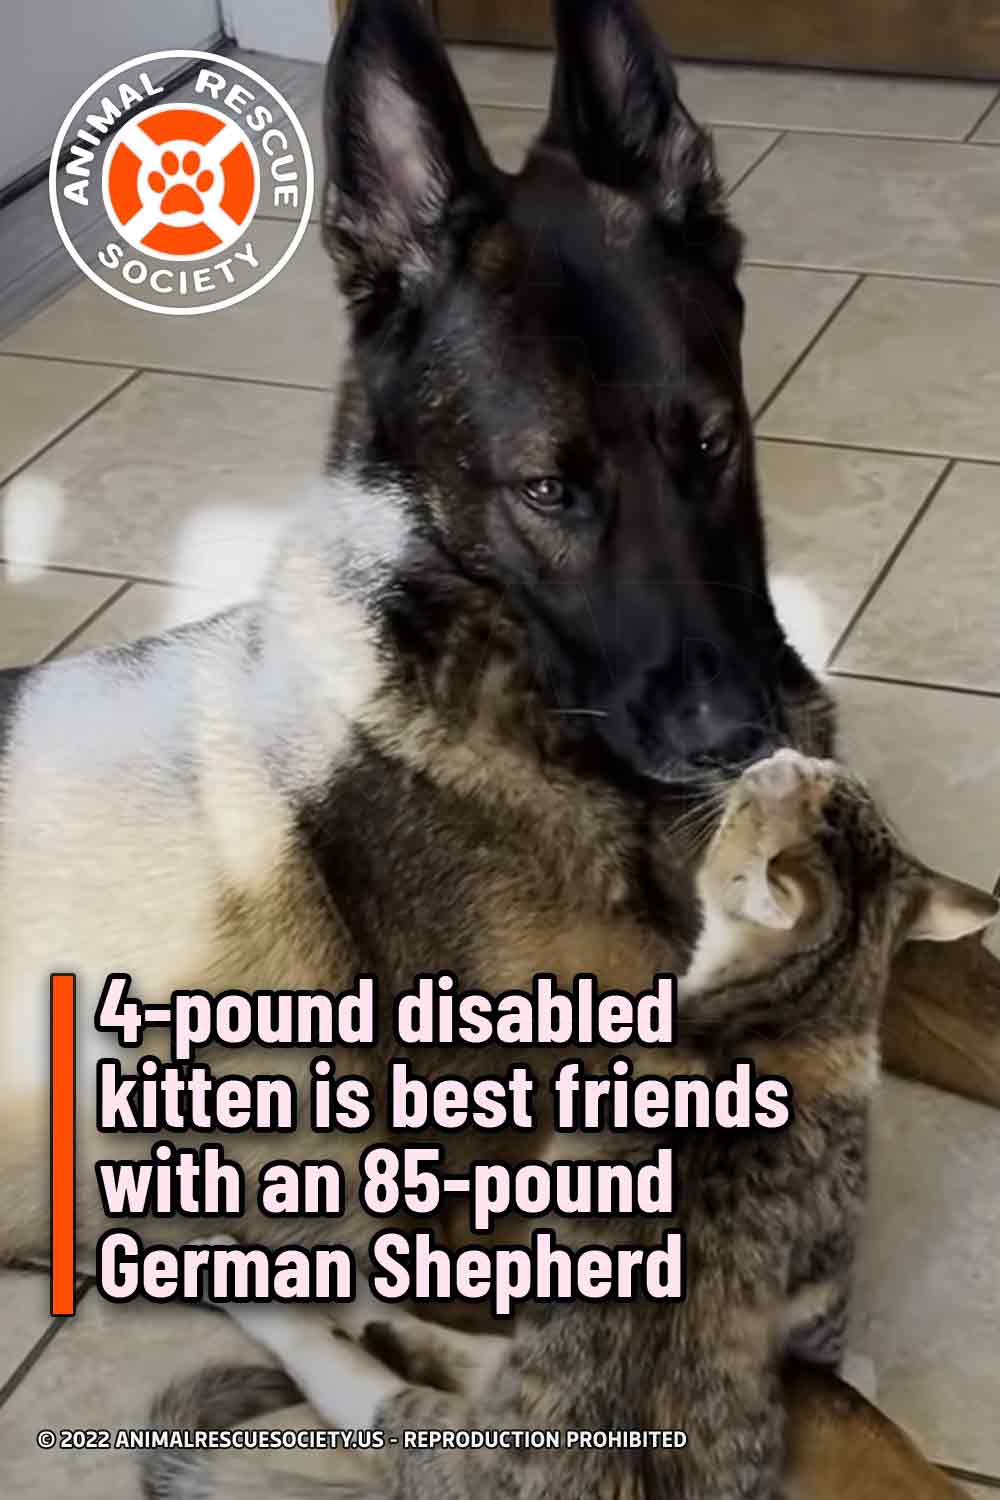 4-pound disabled kitten is best friends with an 85-pound German Shepherd